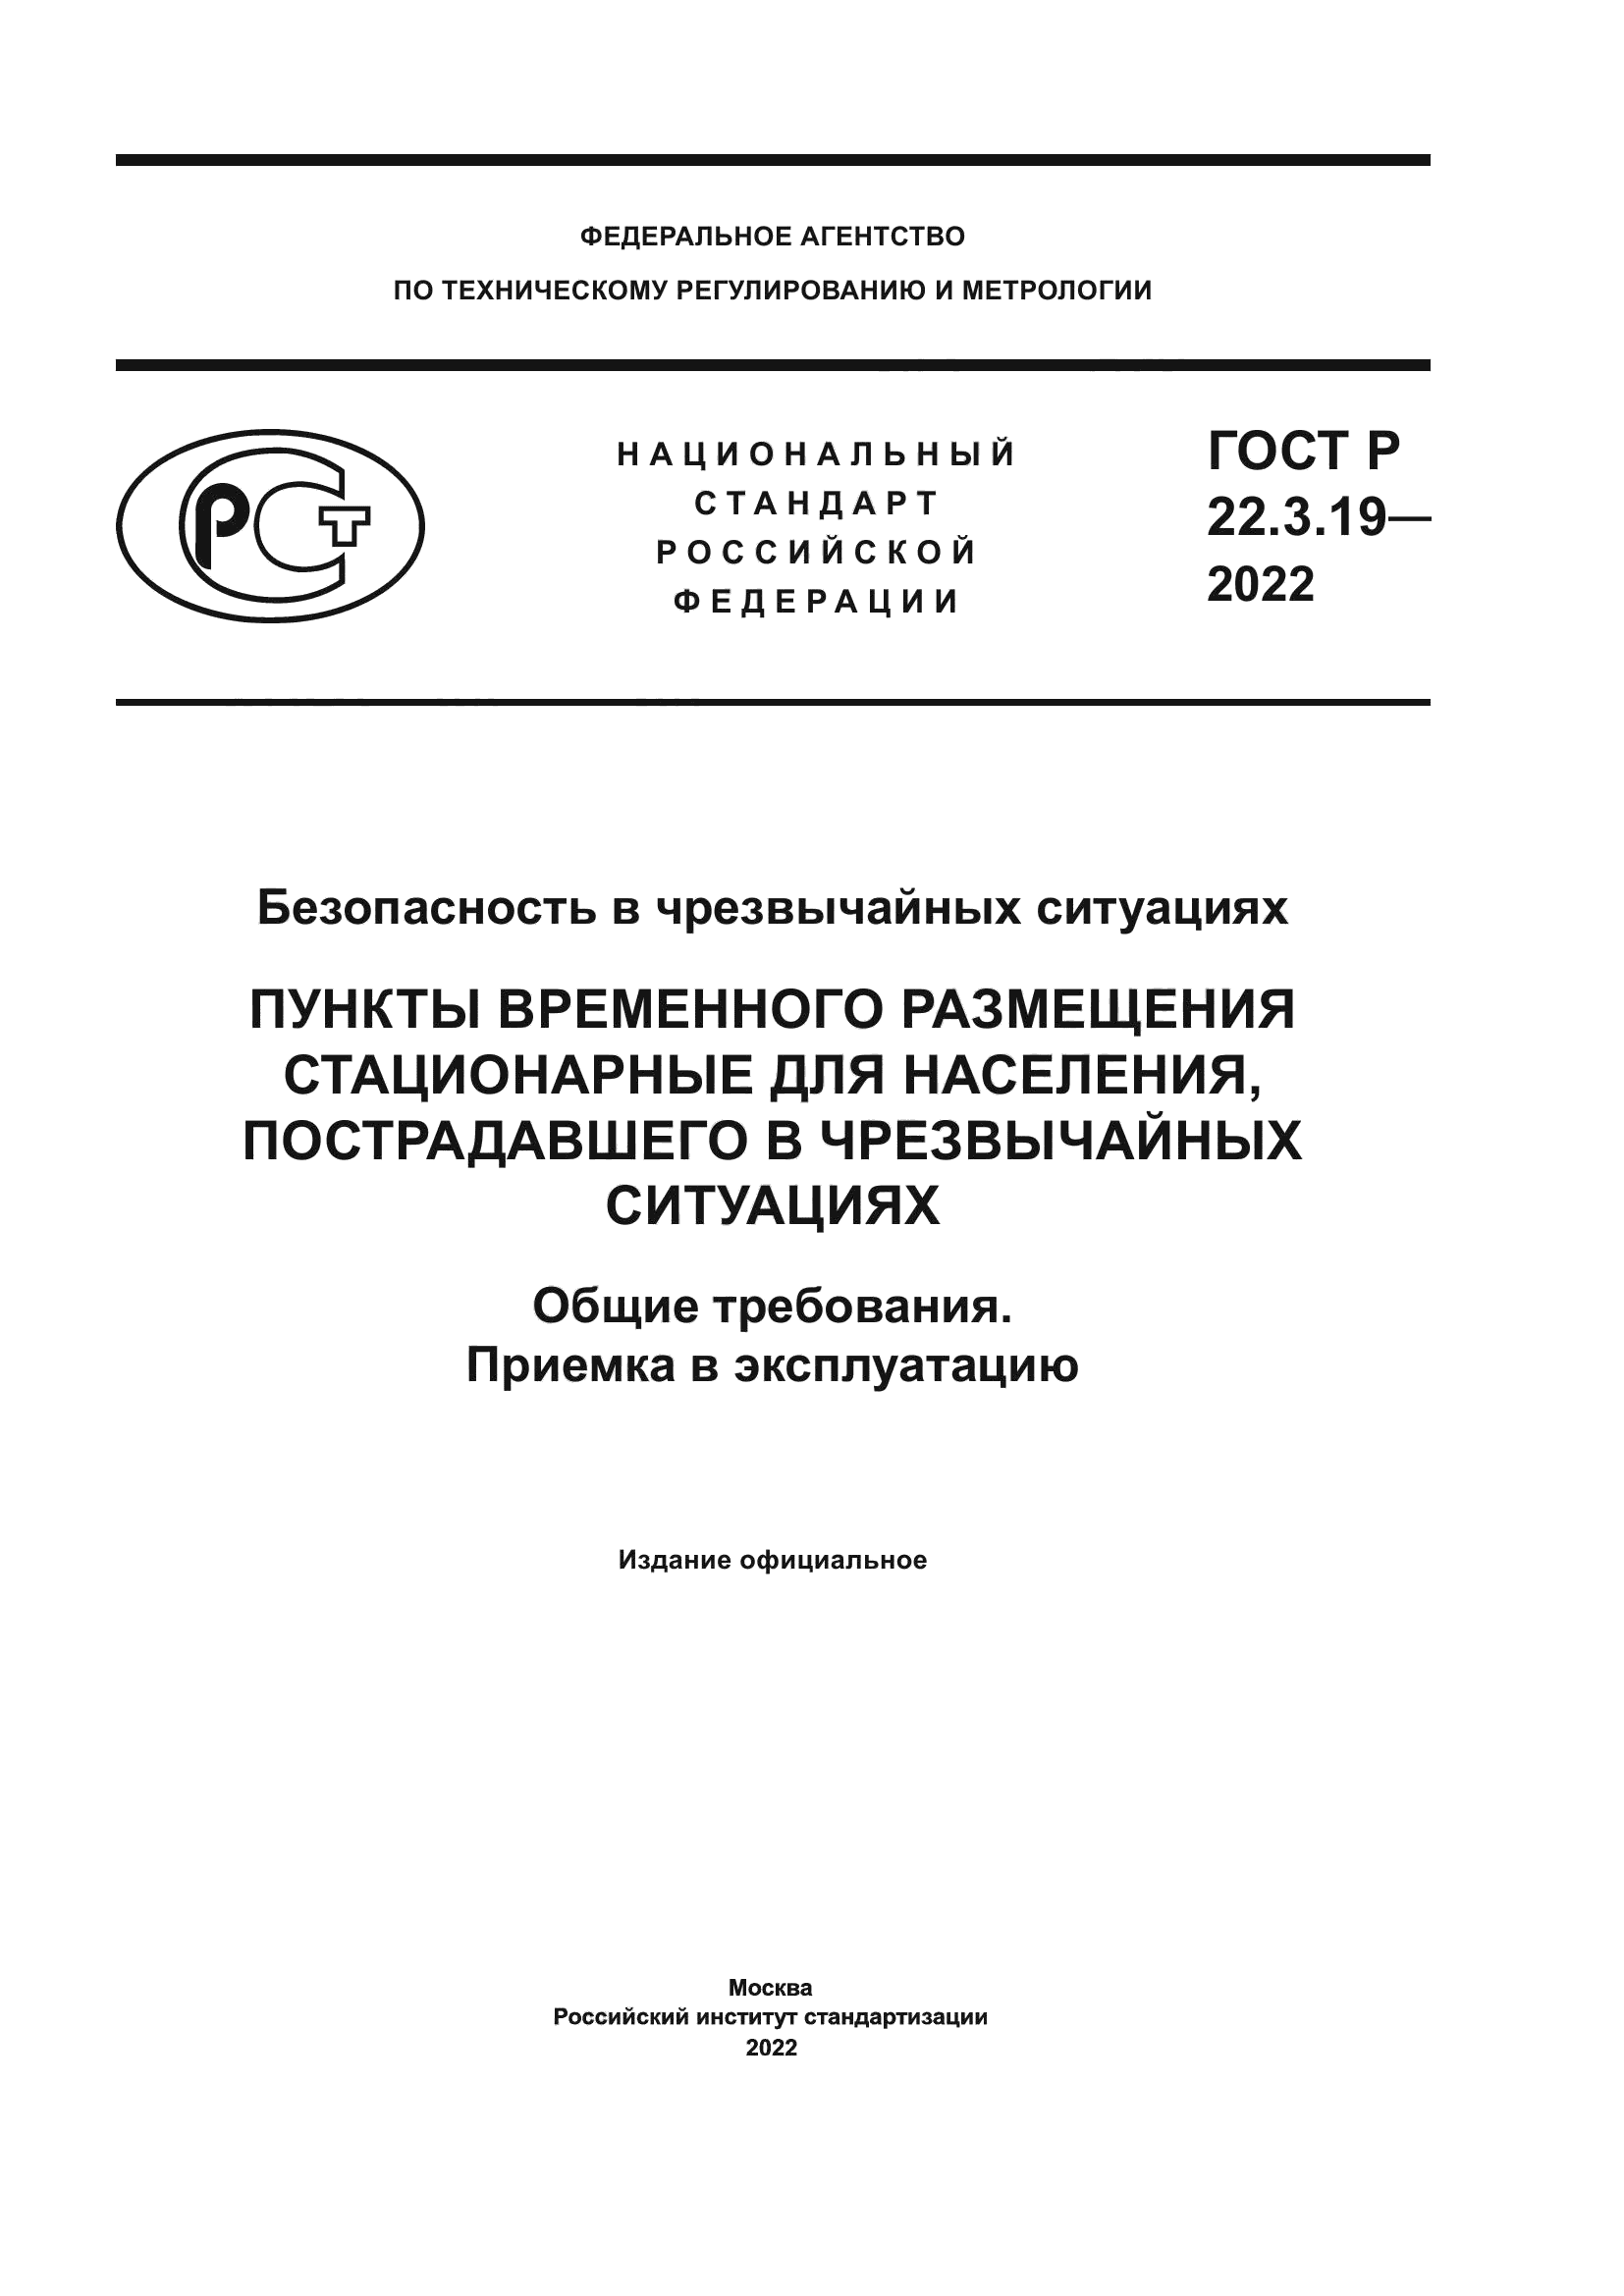 ГОСТ Р 22.3.19-2022